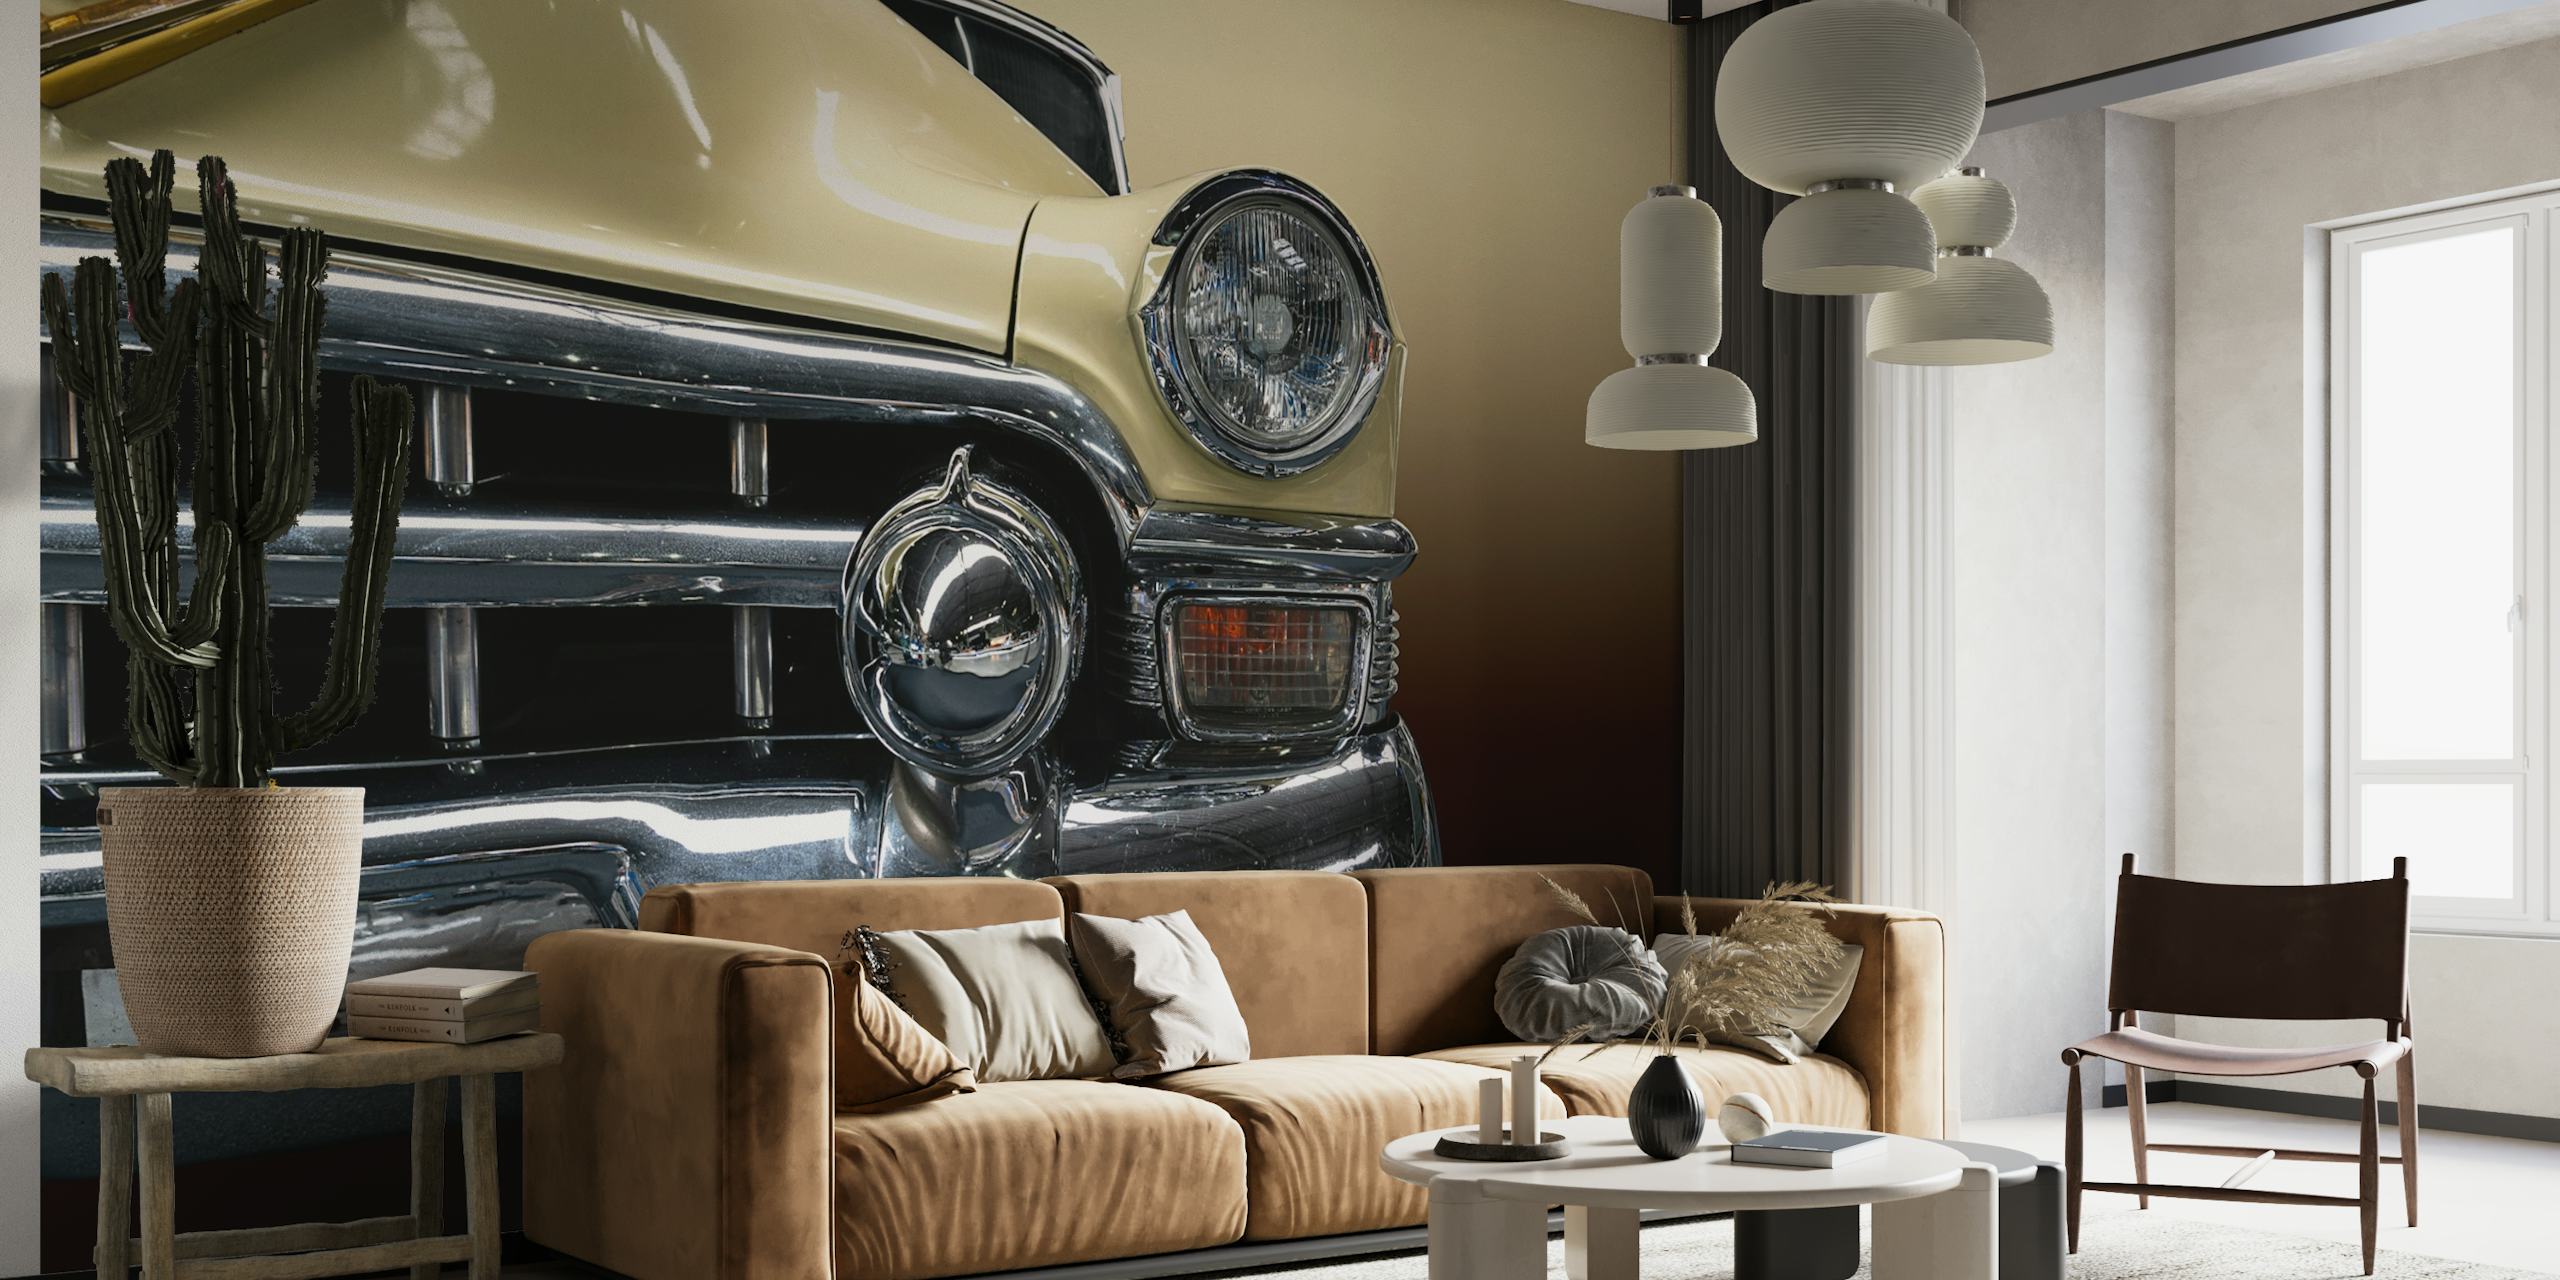 Vintage Beige Cadillac zidna slika s kromiranim detaljima